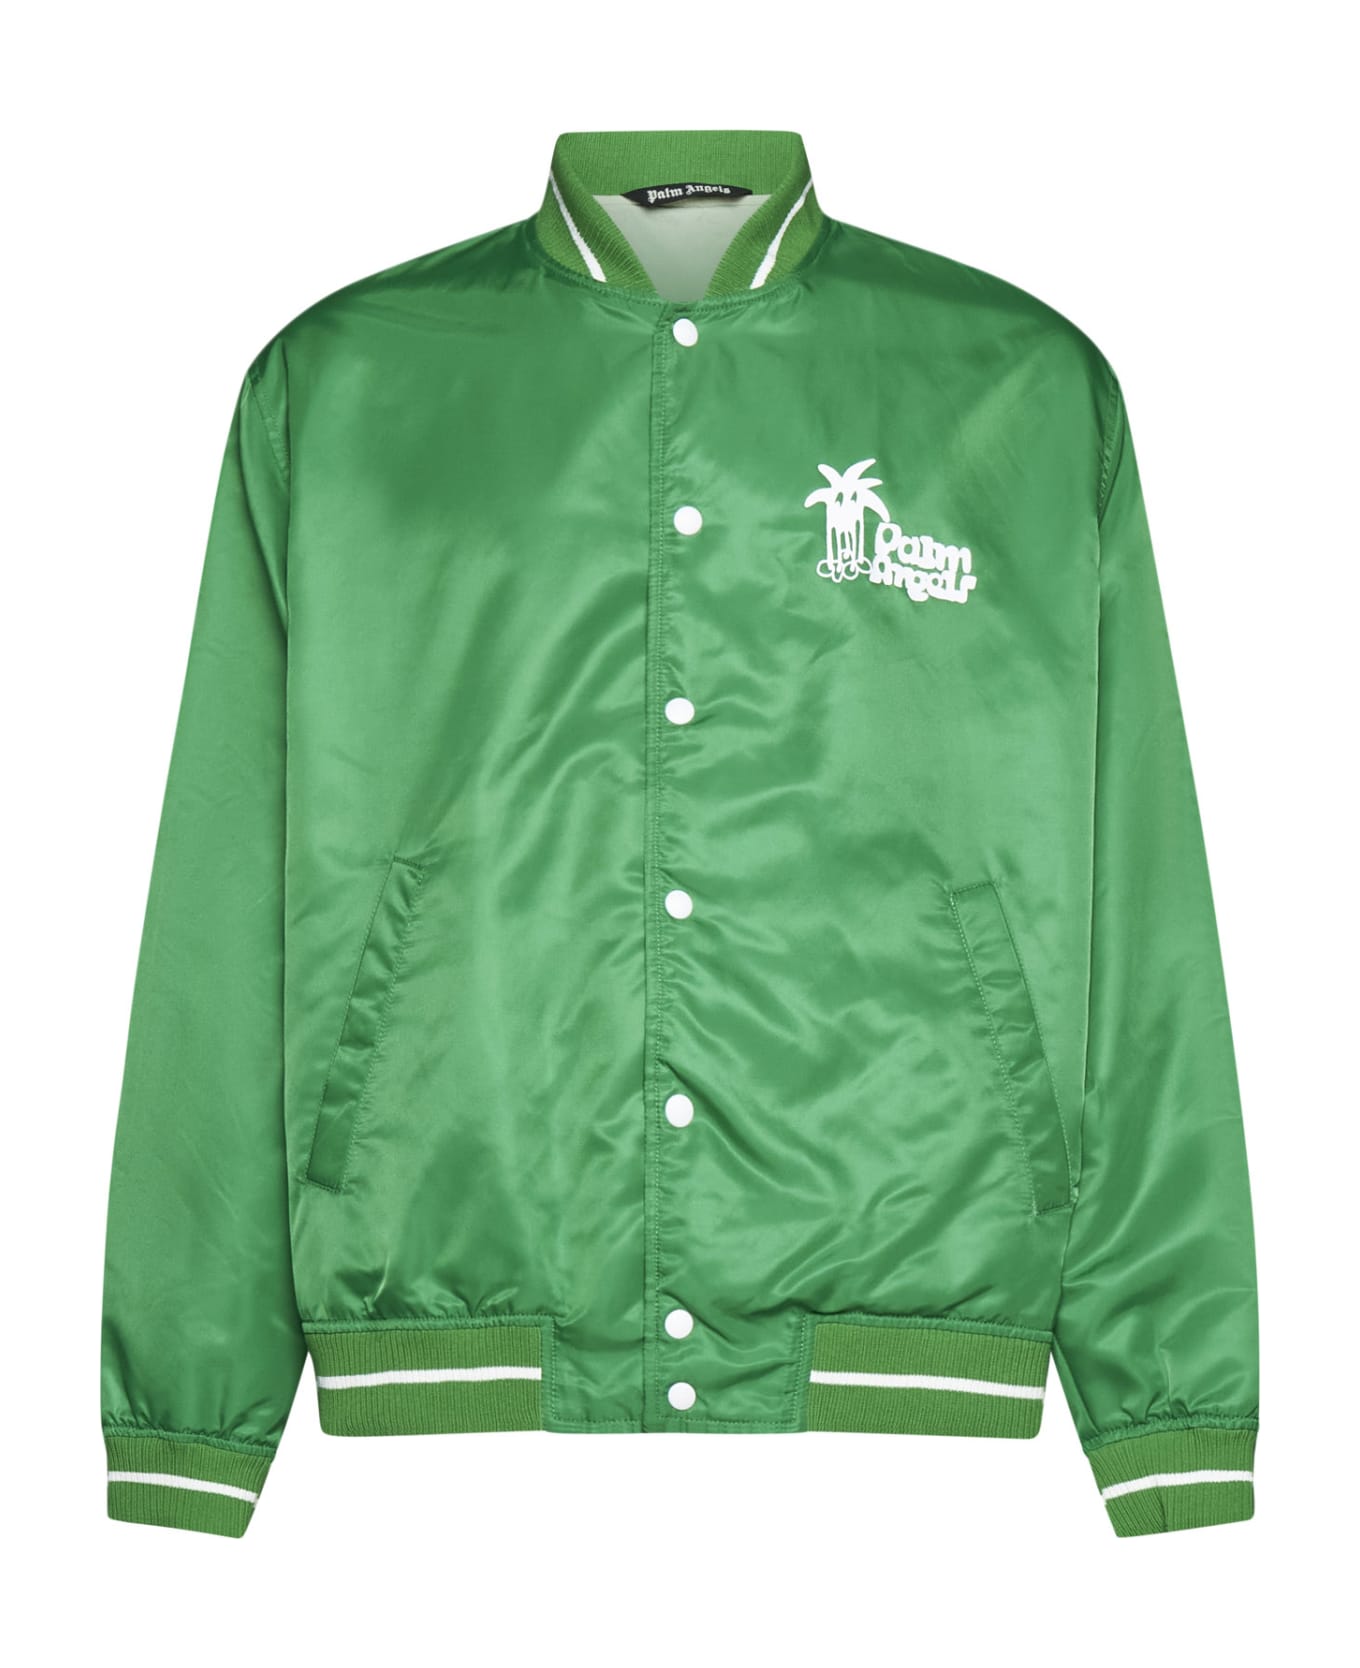 Palm Angels Bomber Jacket - Green white